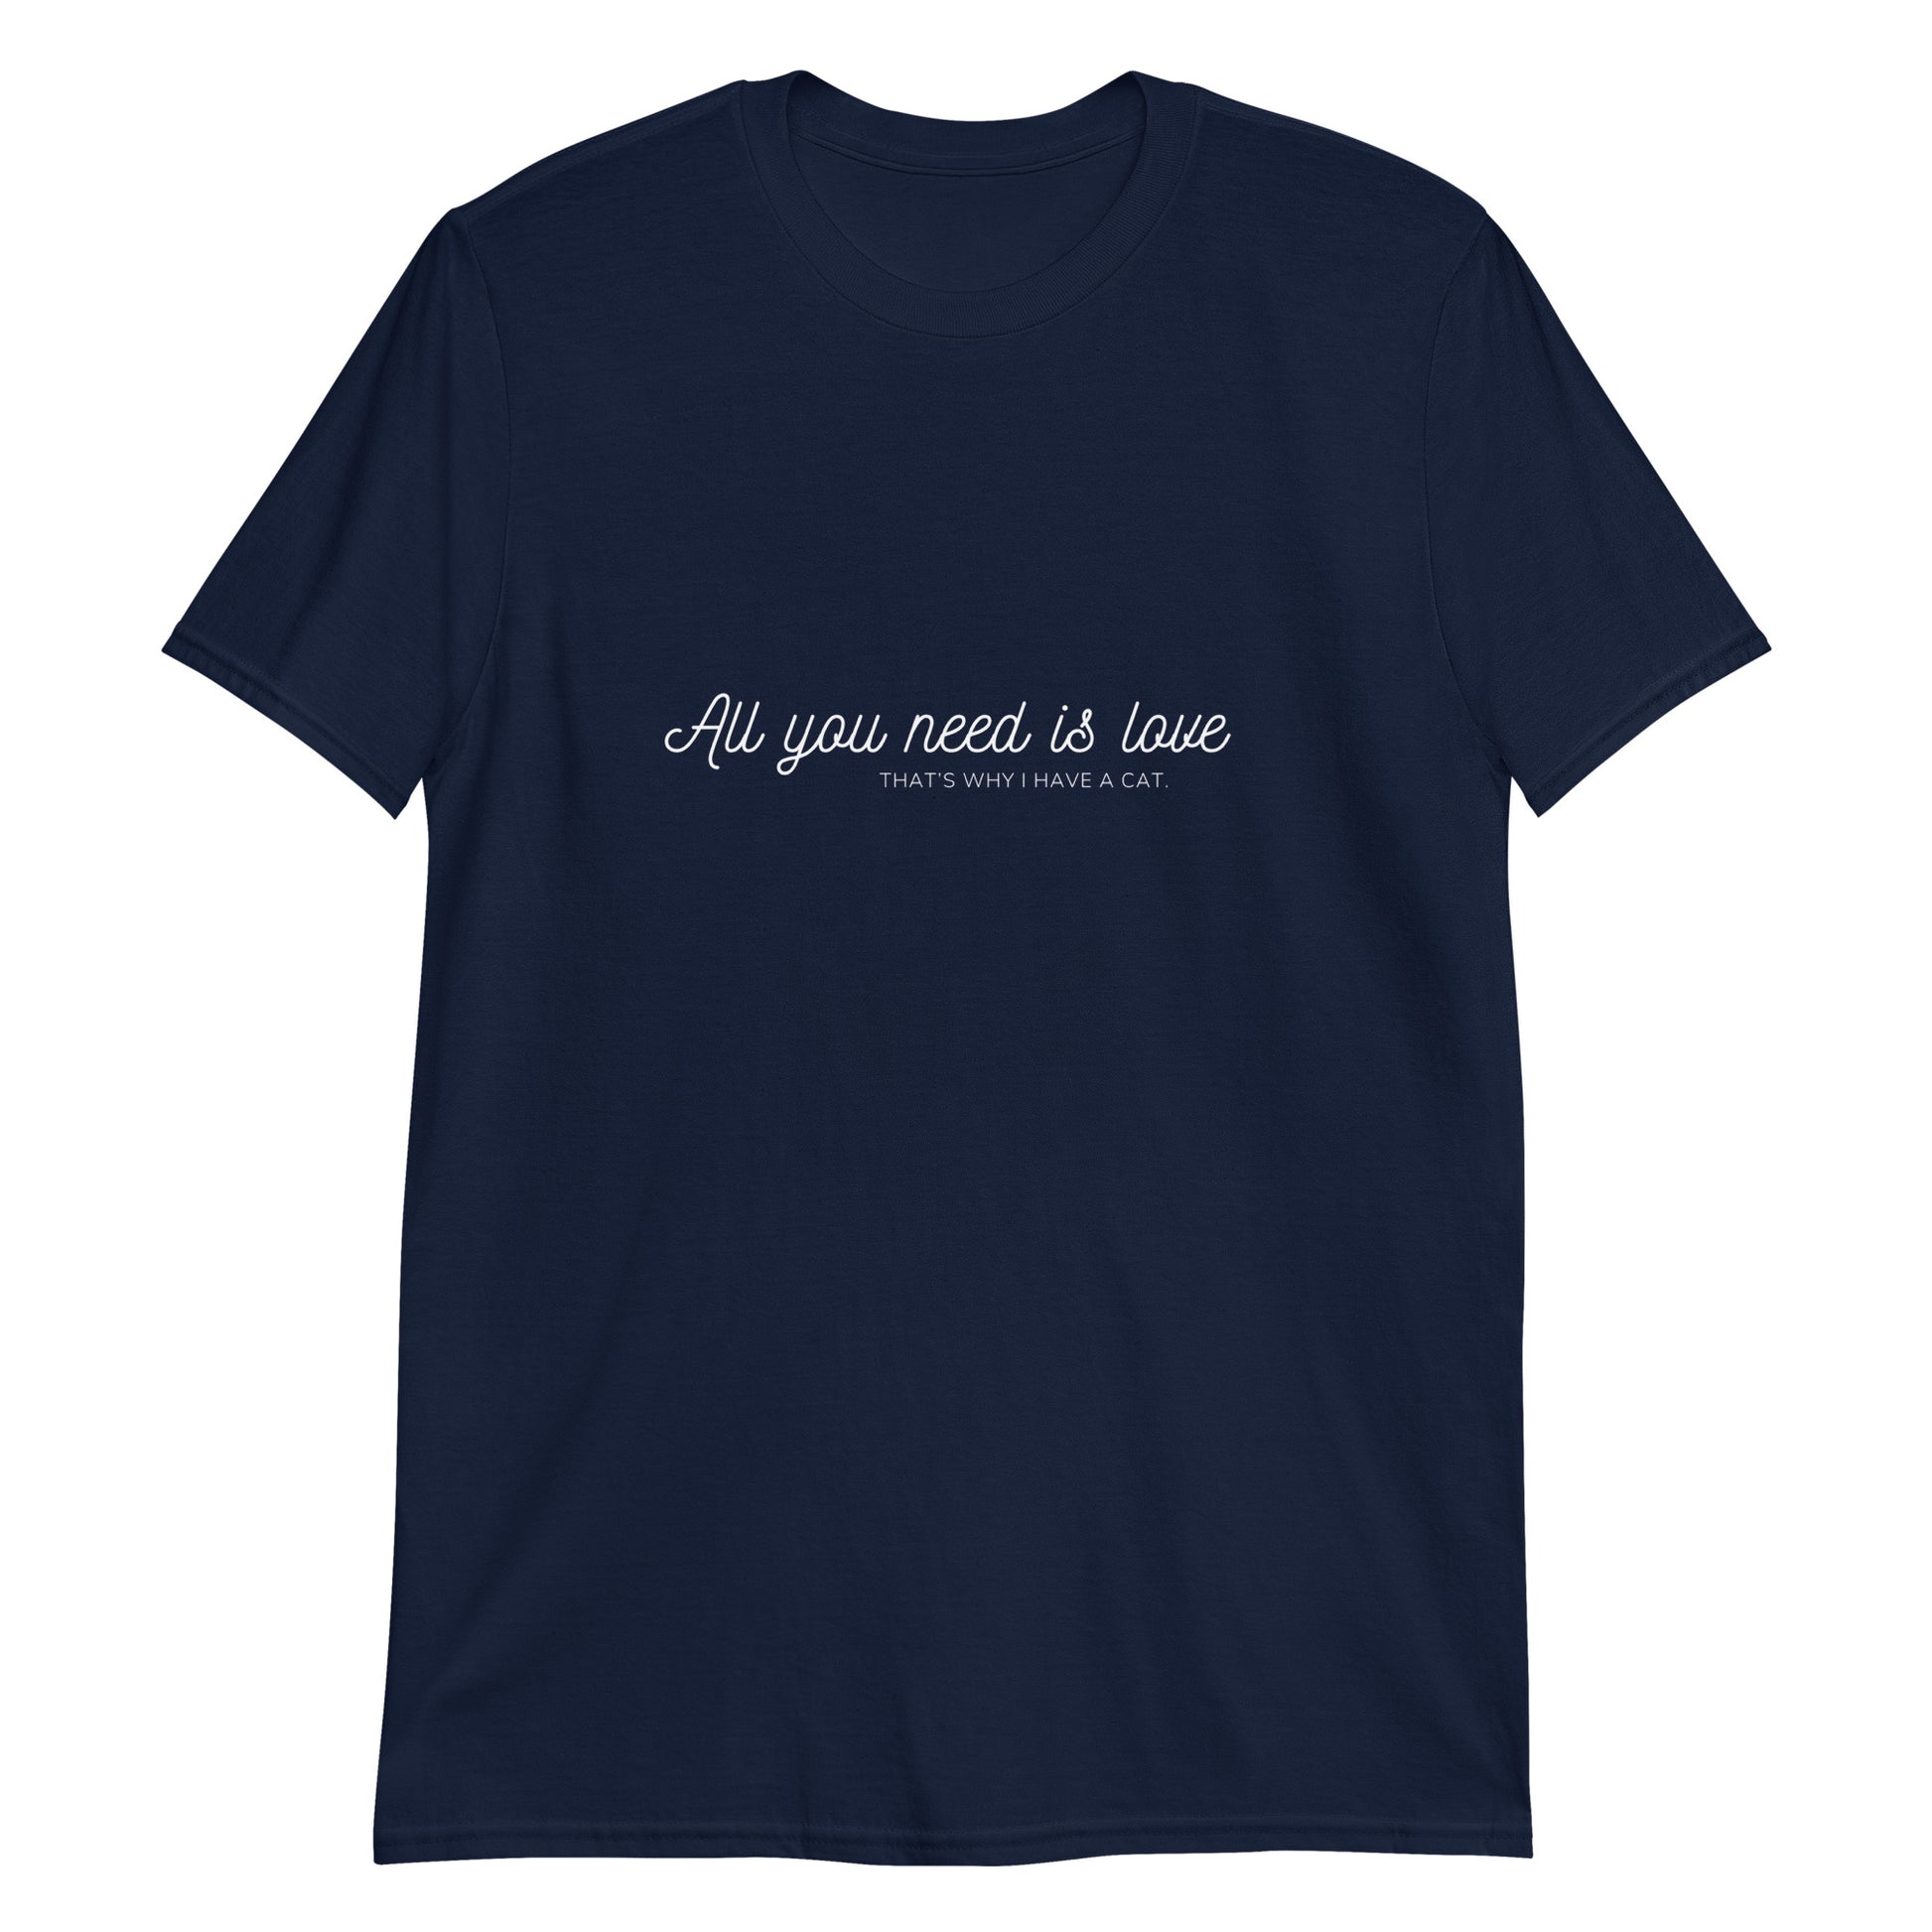 sklep dla kociary t-shirt all you need is love granatowy 6